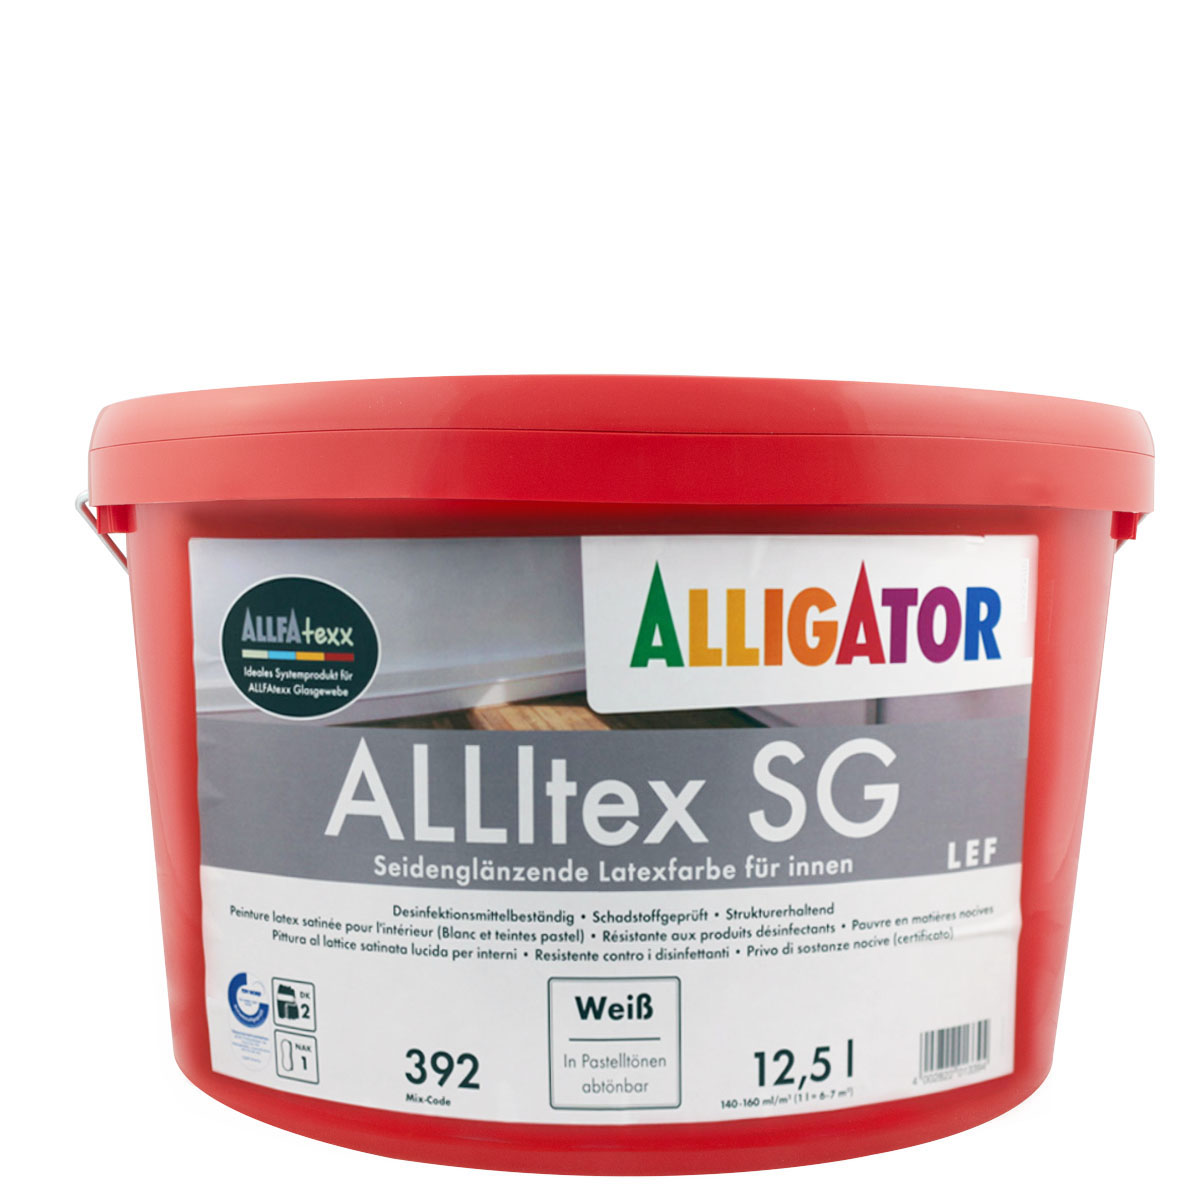 alligator_allitex-SG_12,5l_gross